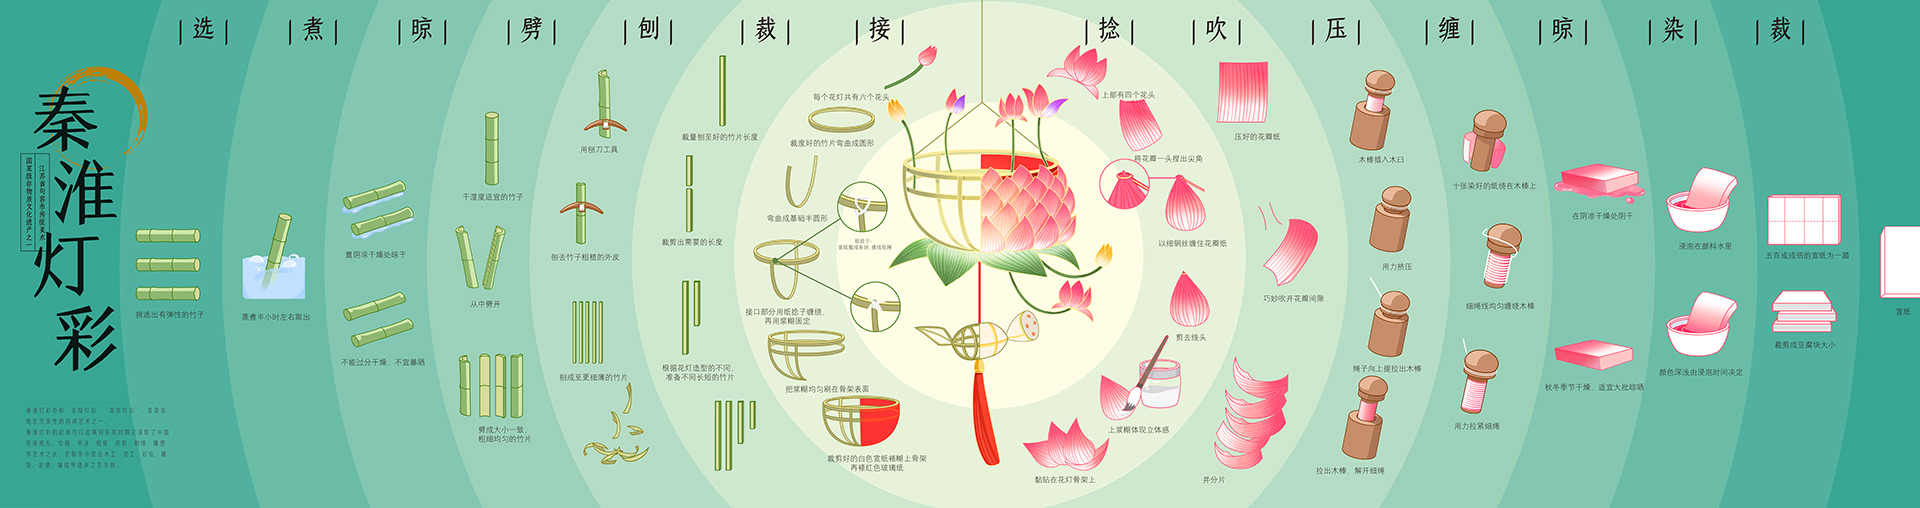 Infographic Design of Qinhuai Lantern